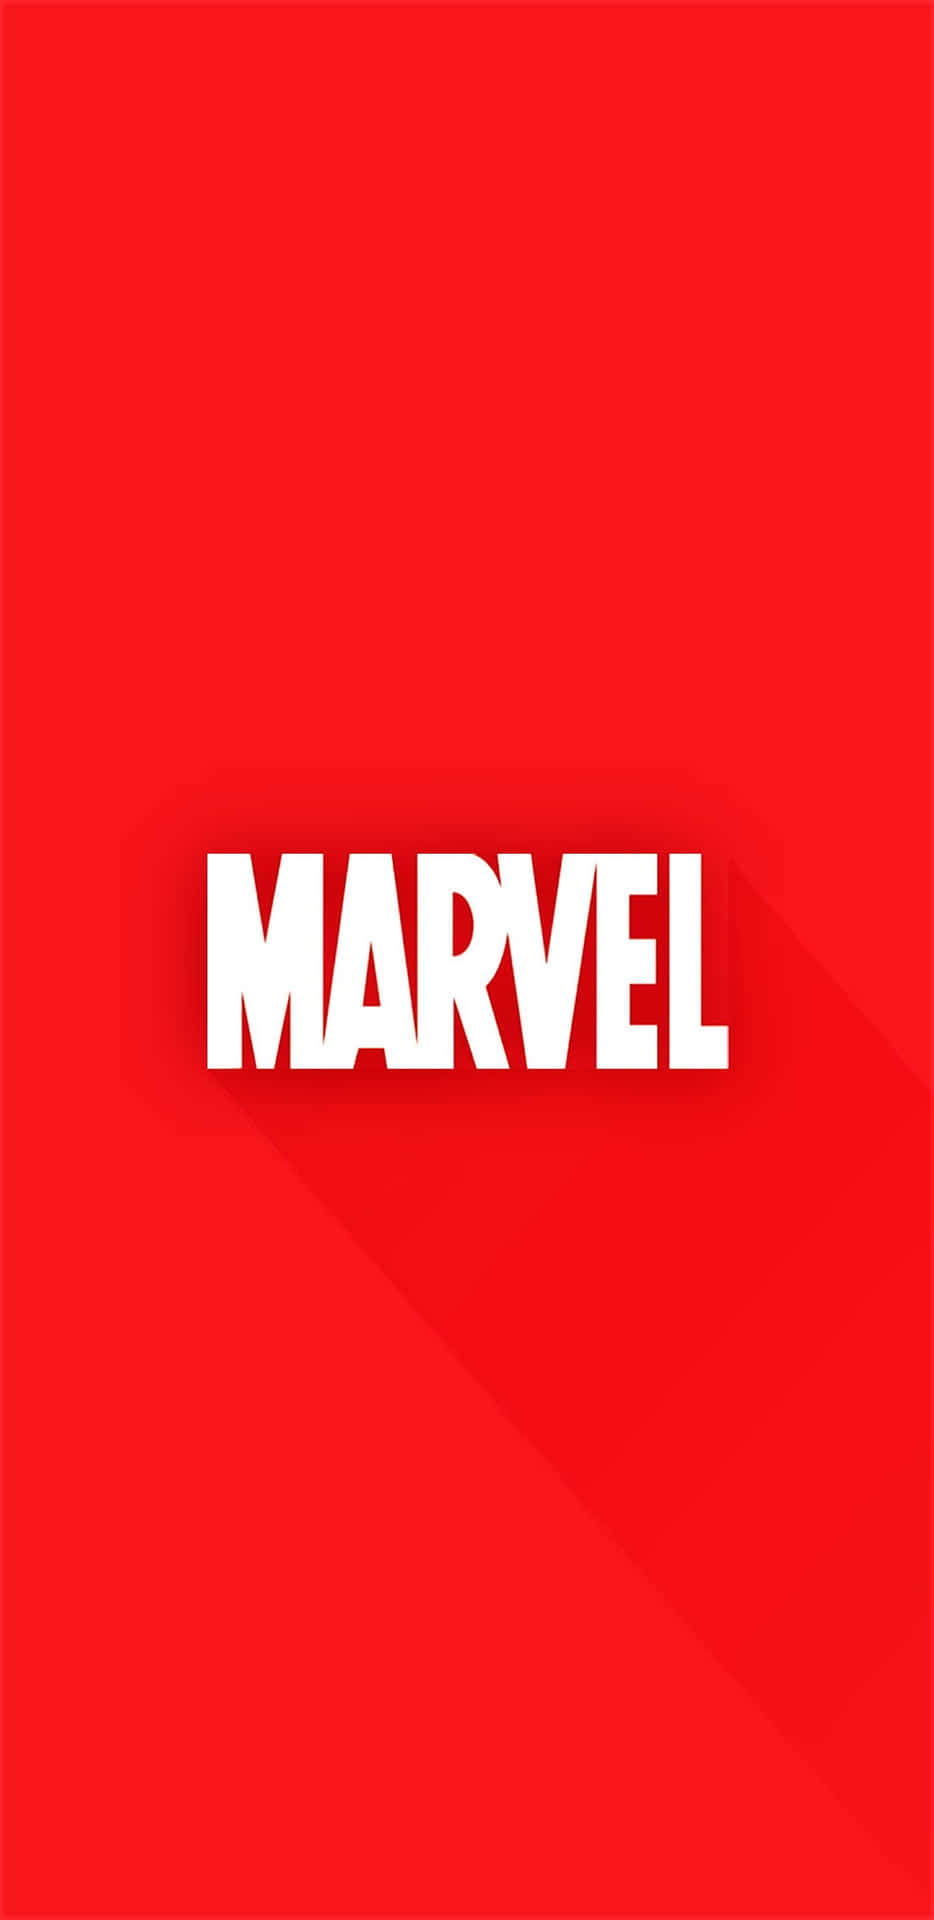 Fondode Pantalla De Marvel Para Pixel 3xl En Rojo Sólido.